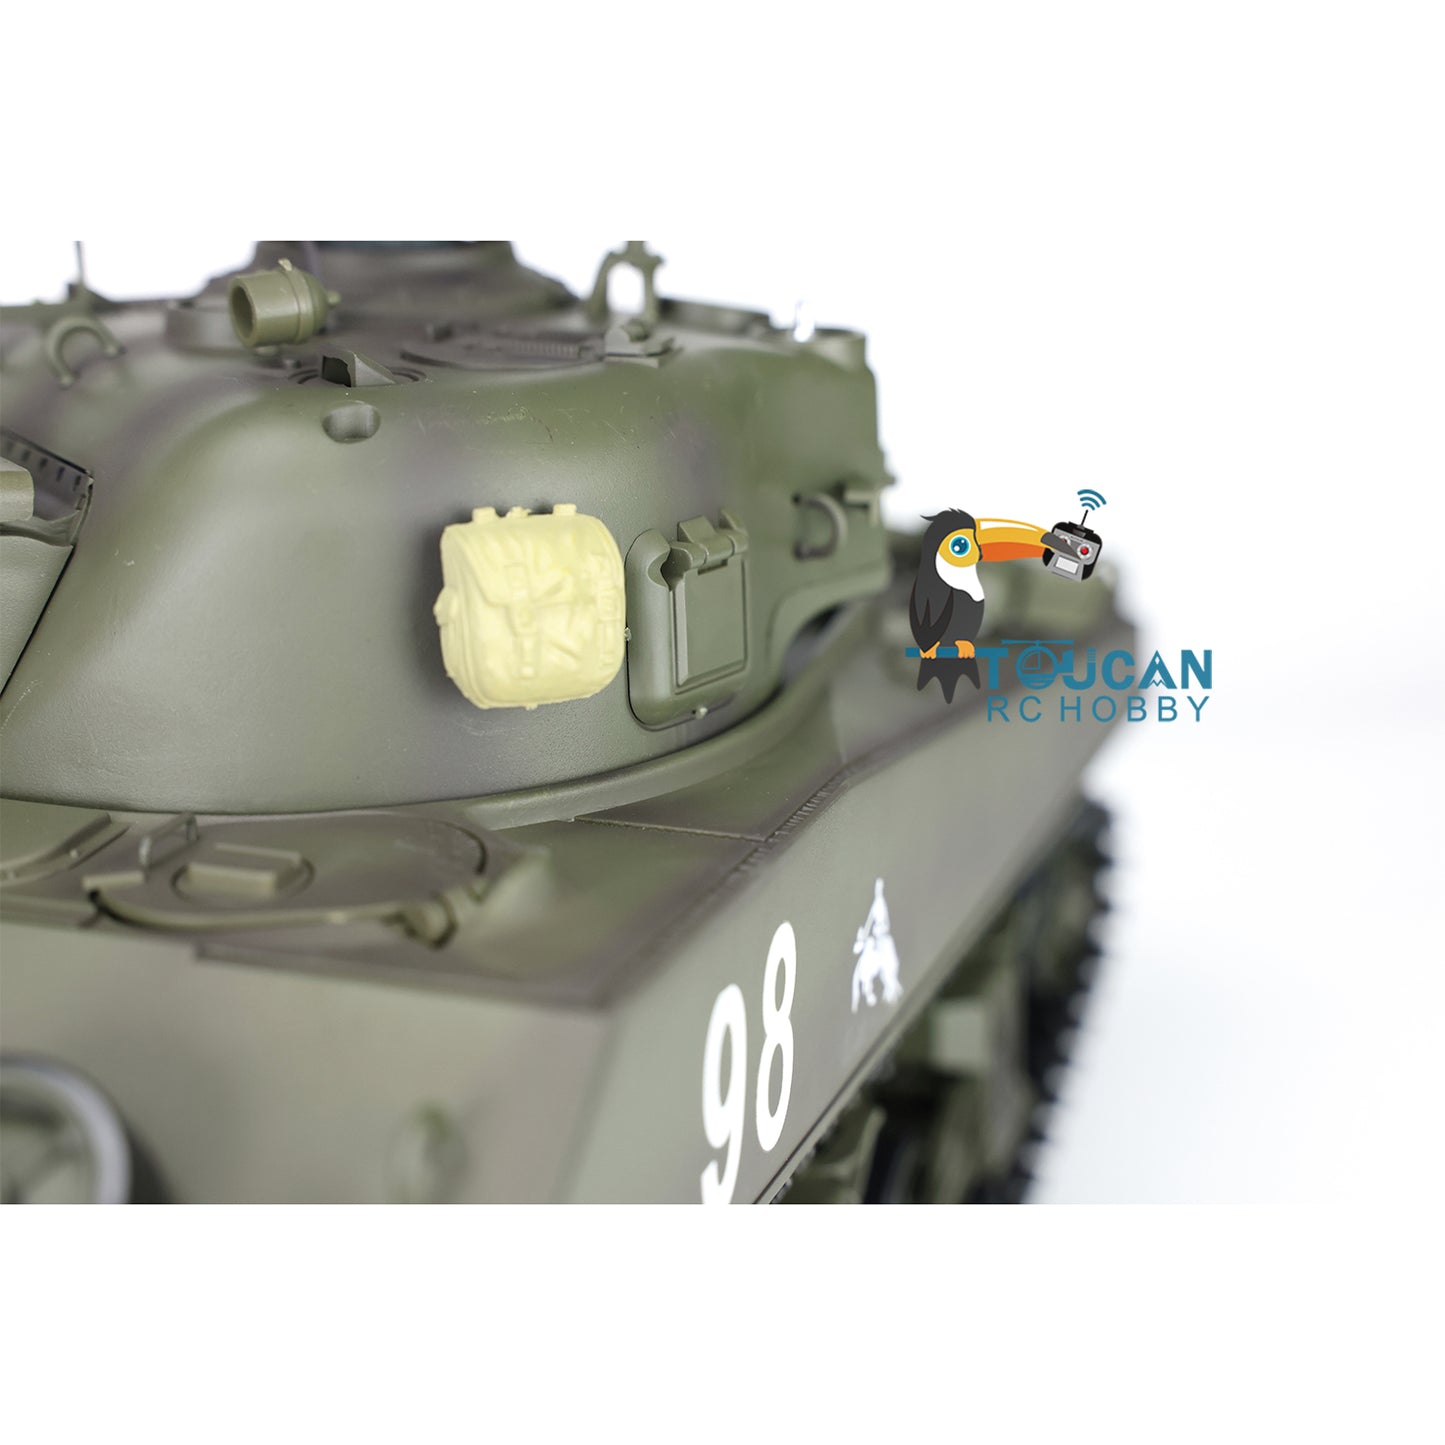 Henglong 1/16 TK7.0 Plastic M4A3 Sherman RC Tank Model 3898 w/ 360 Degrees Rotating Turret FPV Barrel Recoil Smoking Gift for Boys